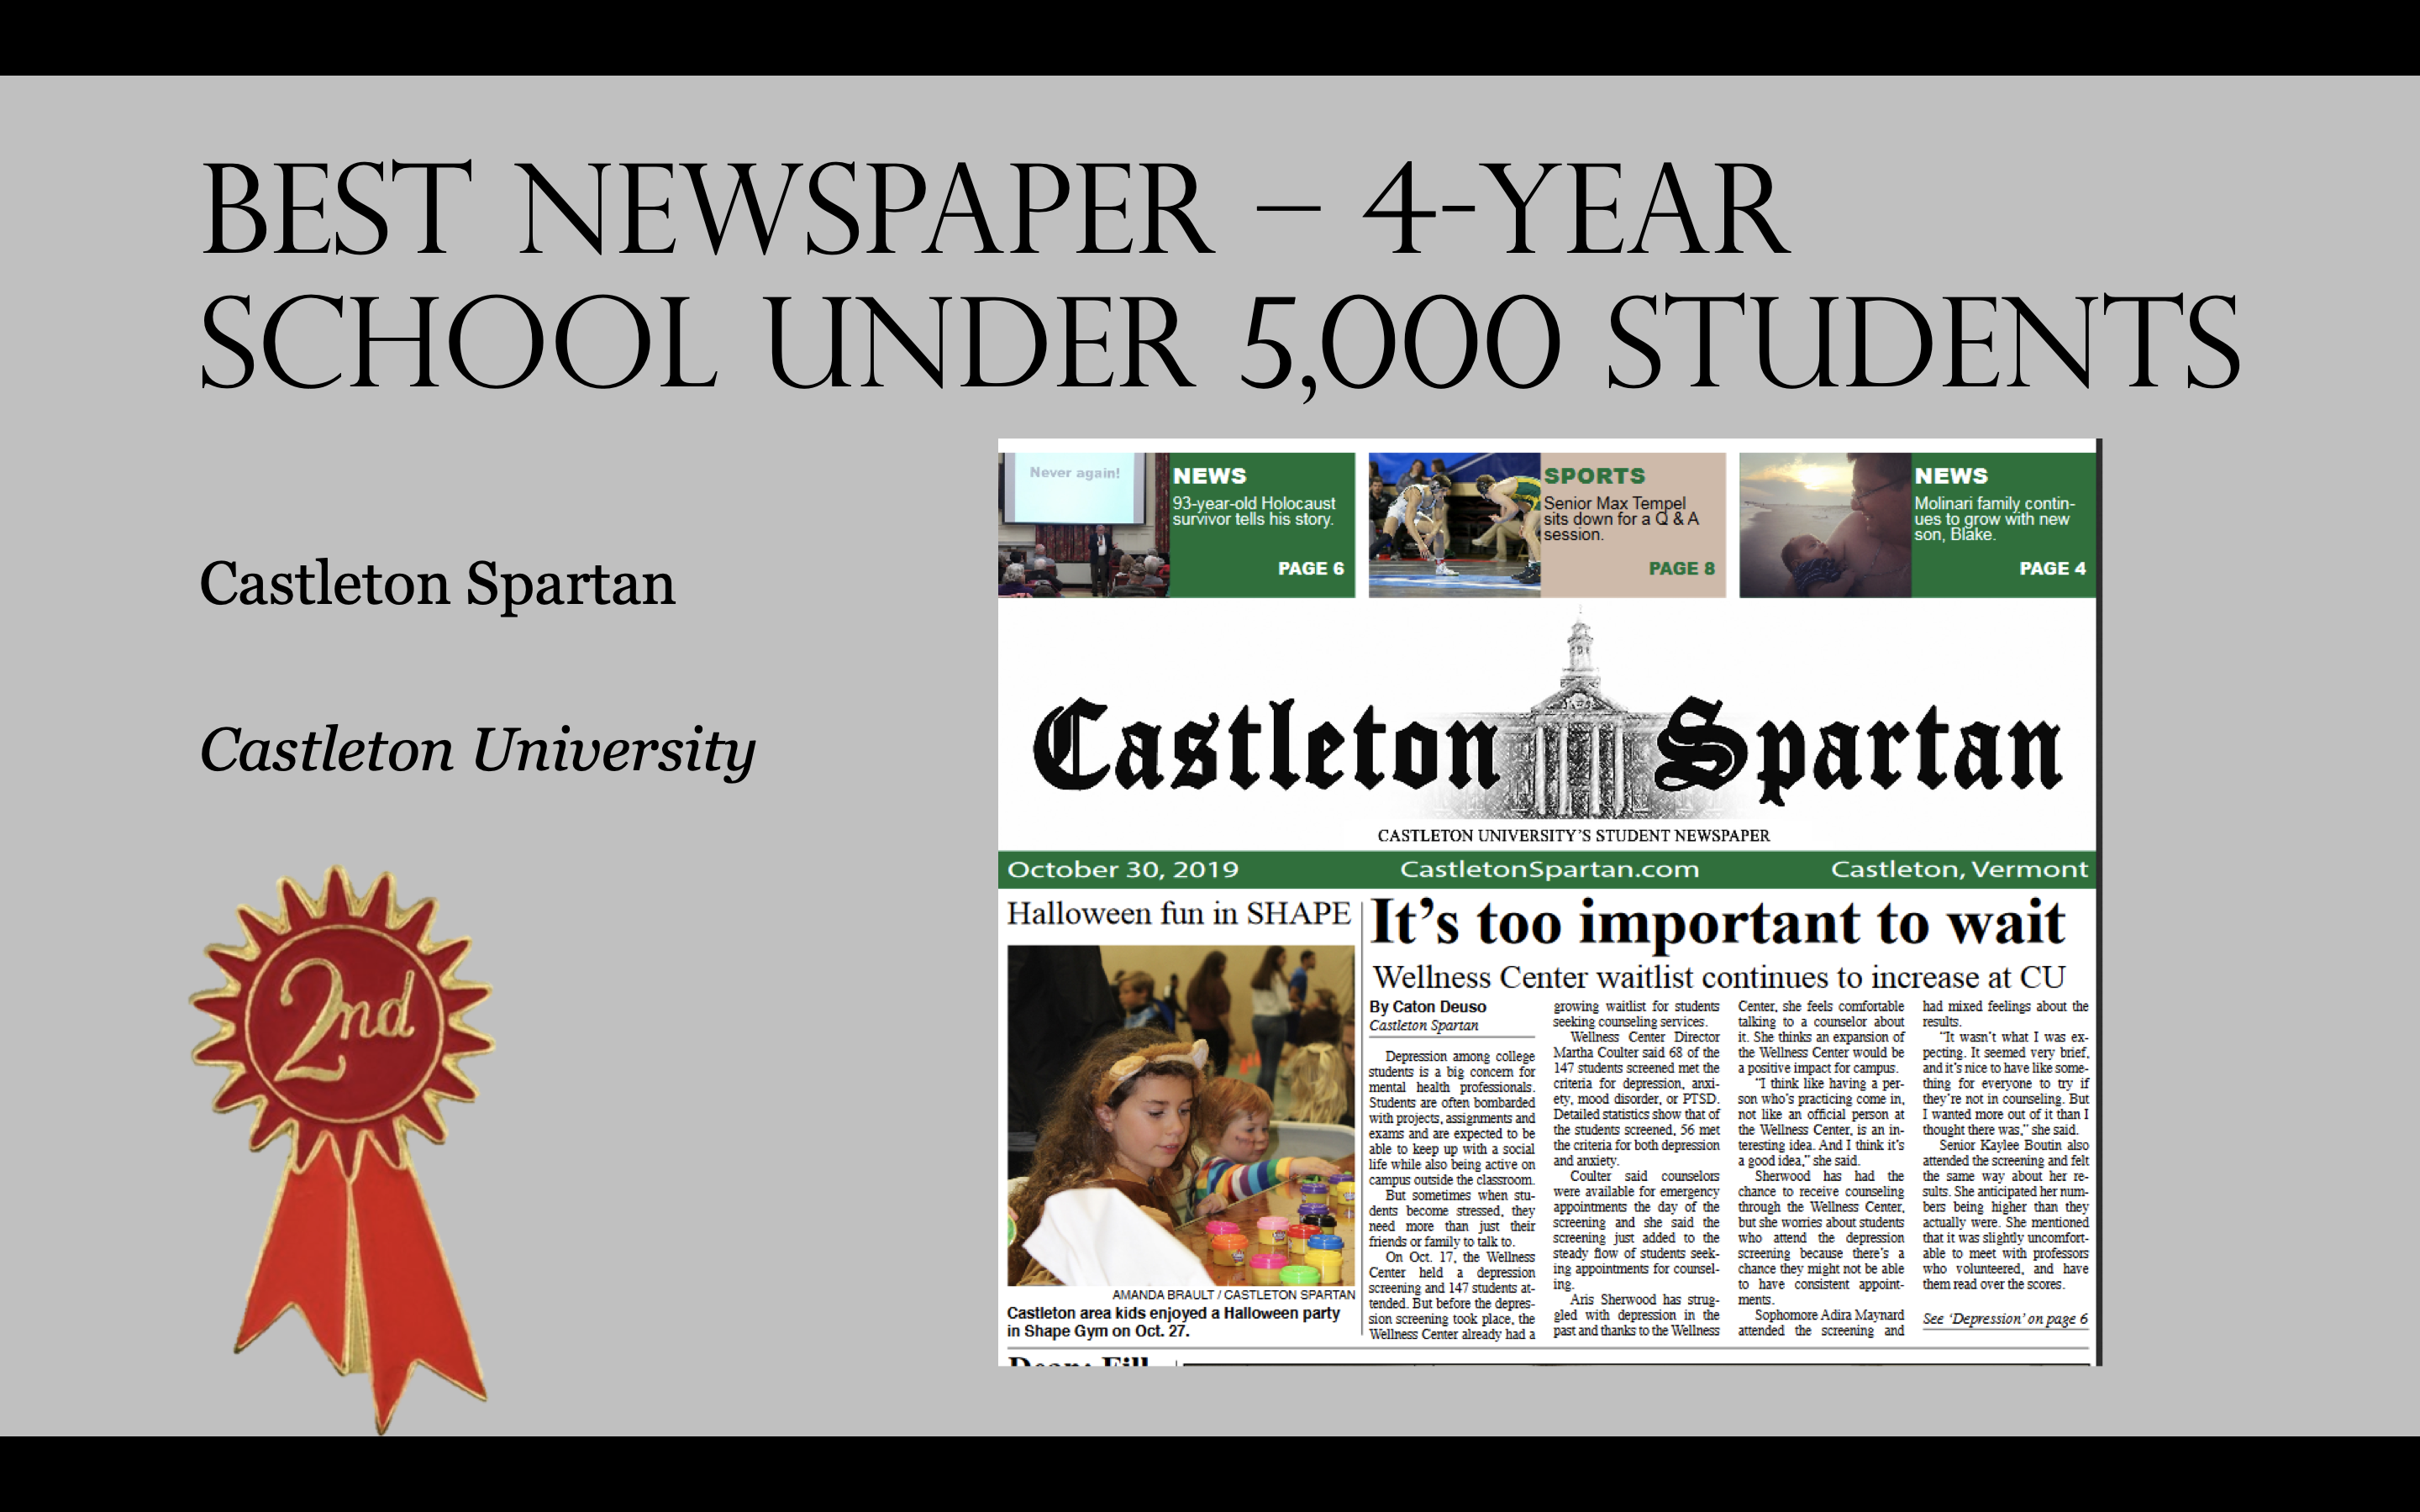 Castleton Spartan takes second for best newspaper